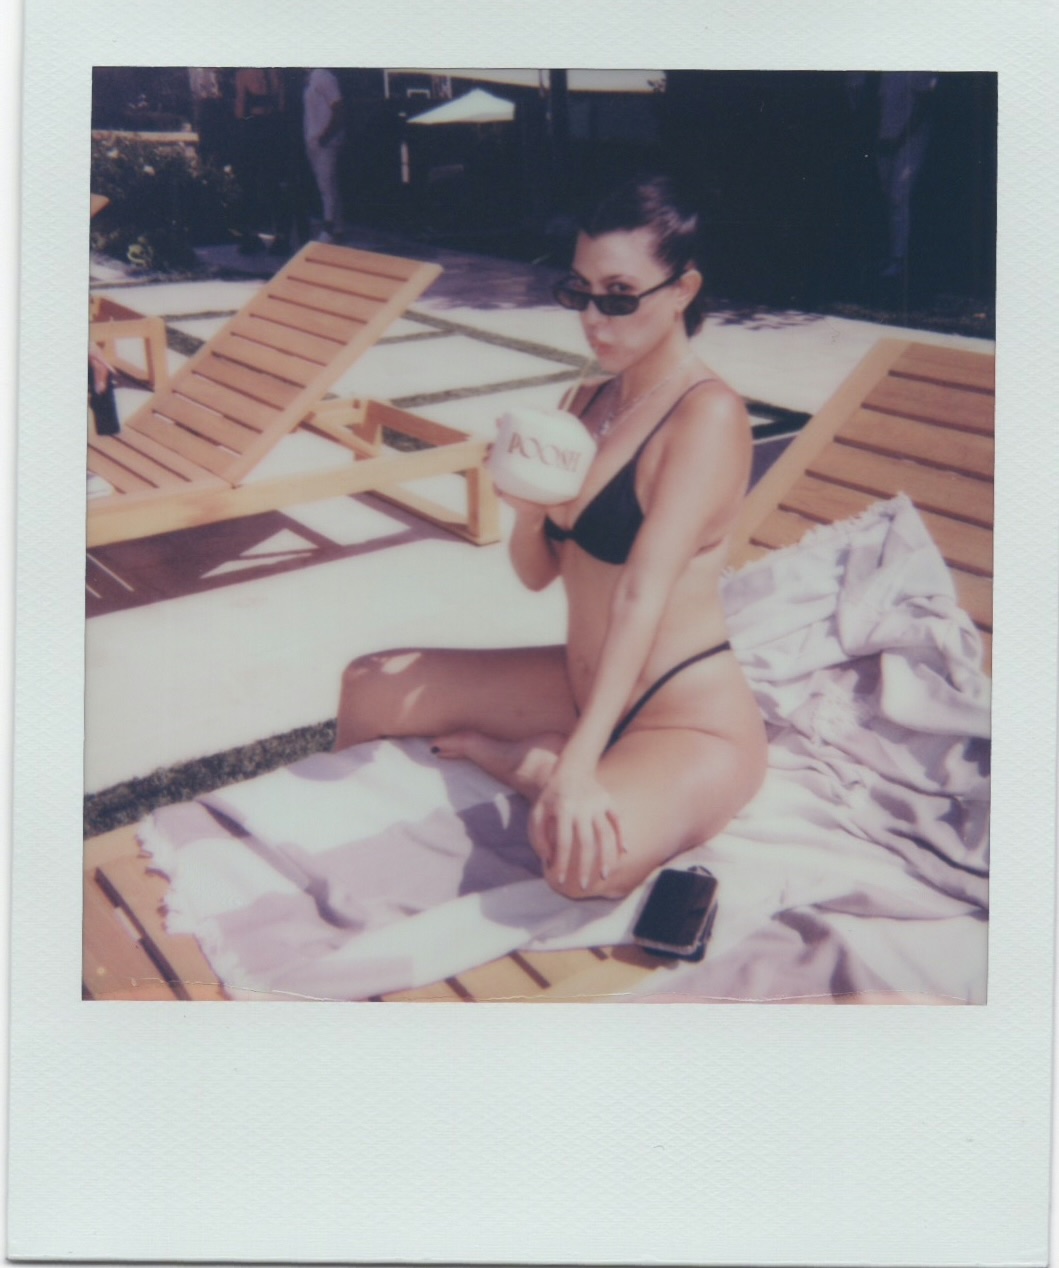 kourtney kardashian at poolside with poosh event drinking coconut